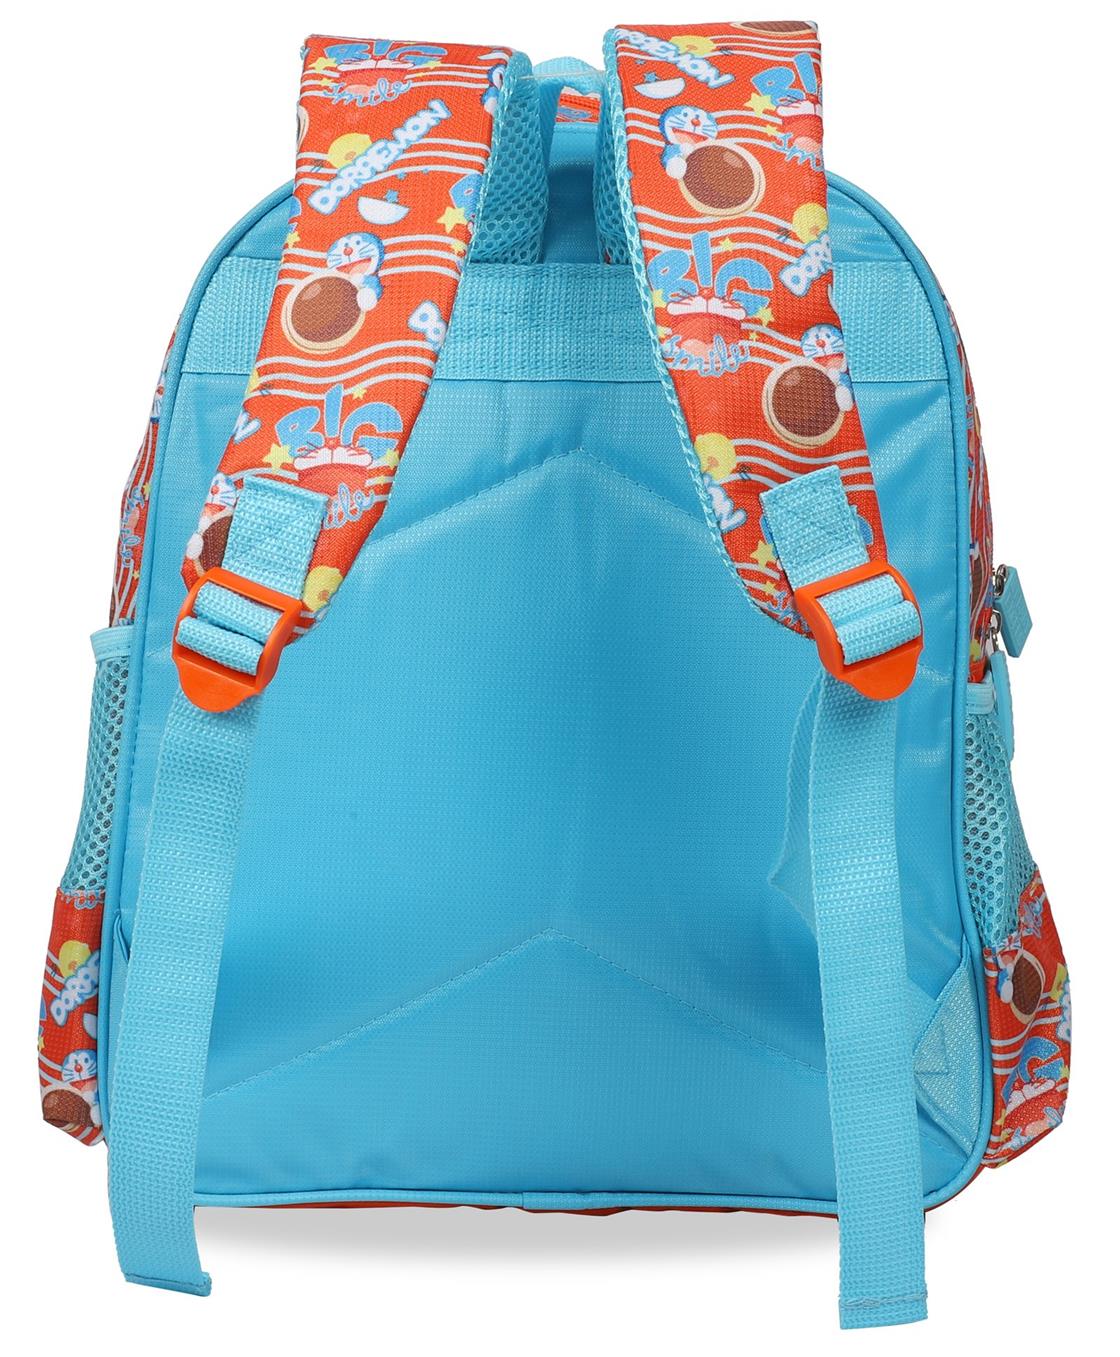 Buy Doraemon School Sling Bag 6 Inch Online at Best Prices